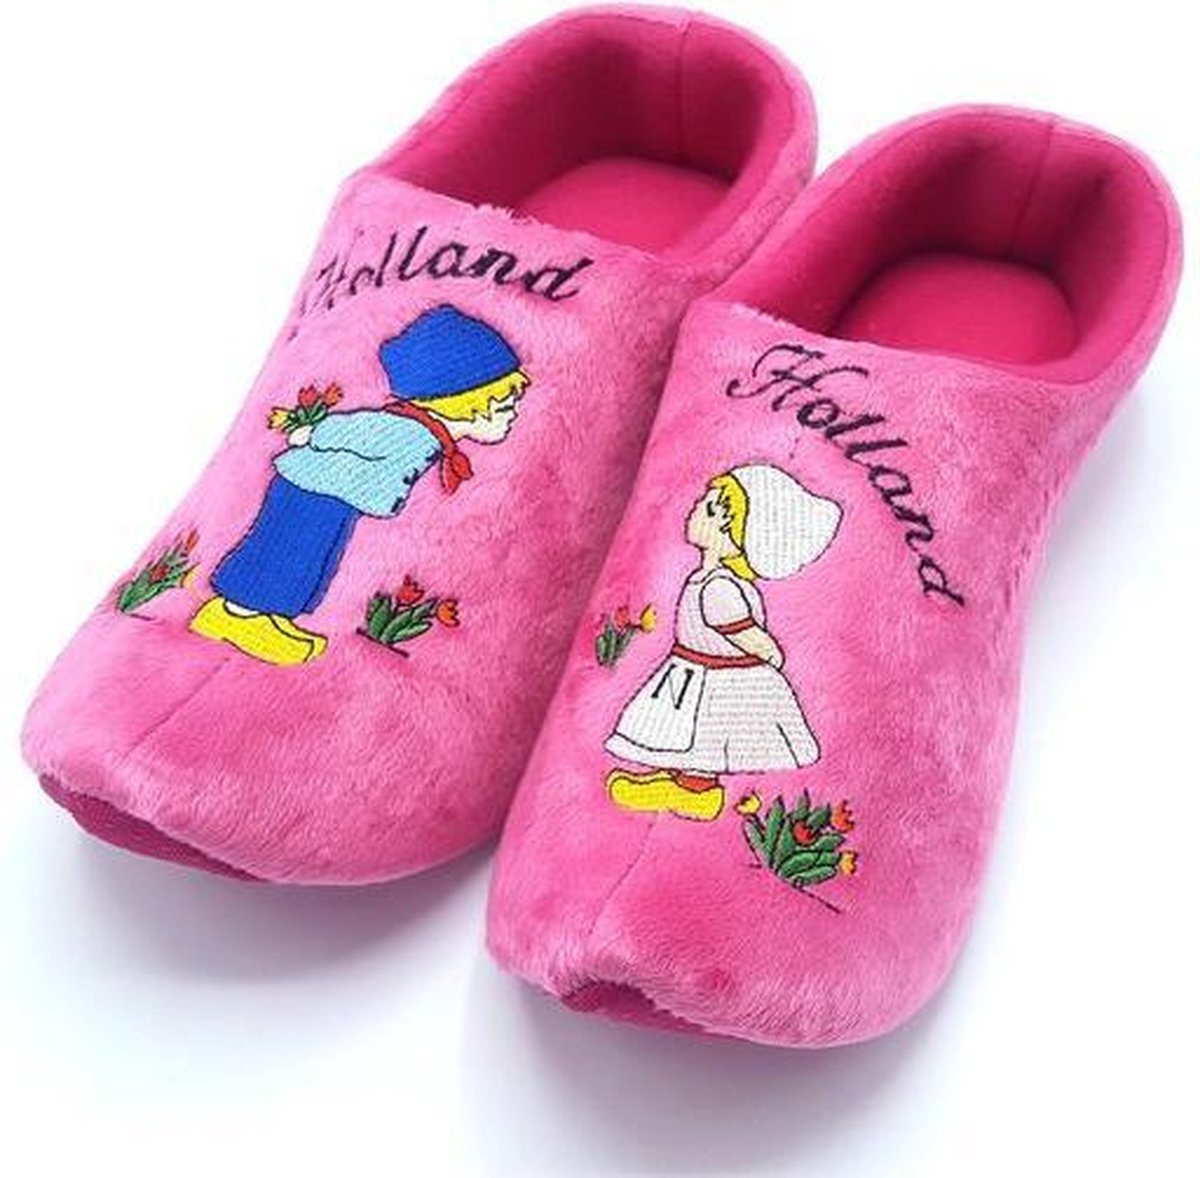 Holland slippers by Wilhelmus Klompsloffen Kissing couple